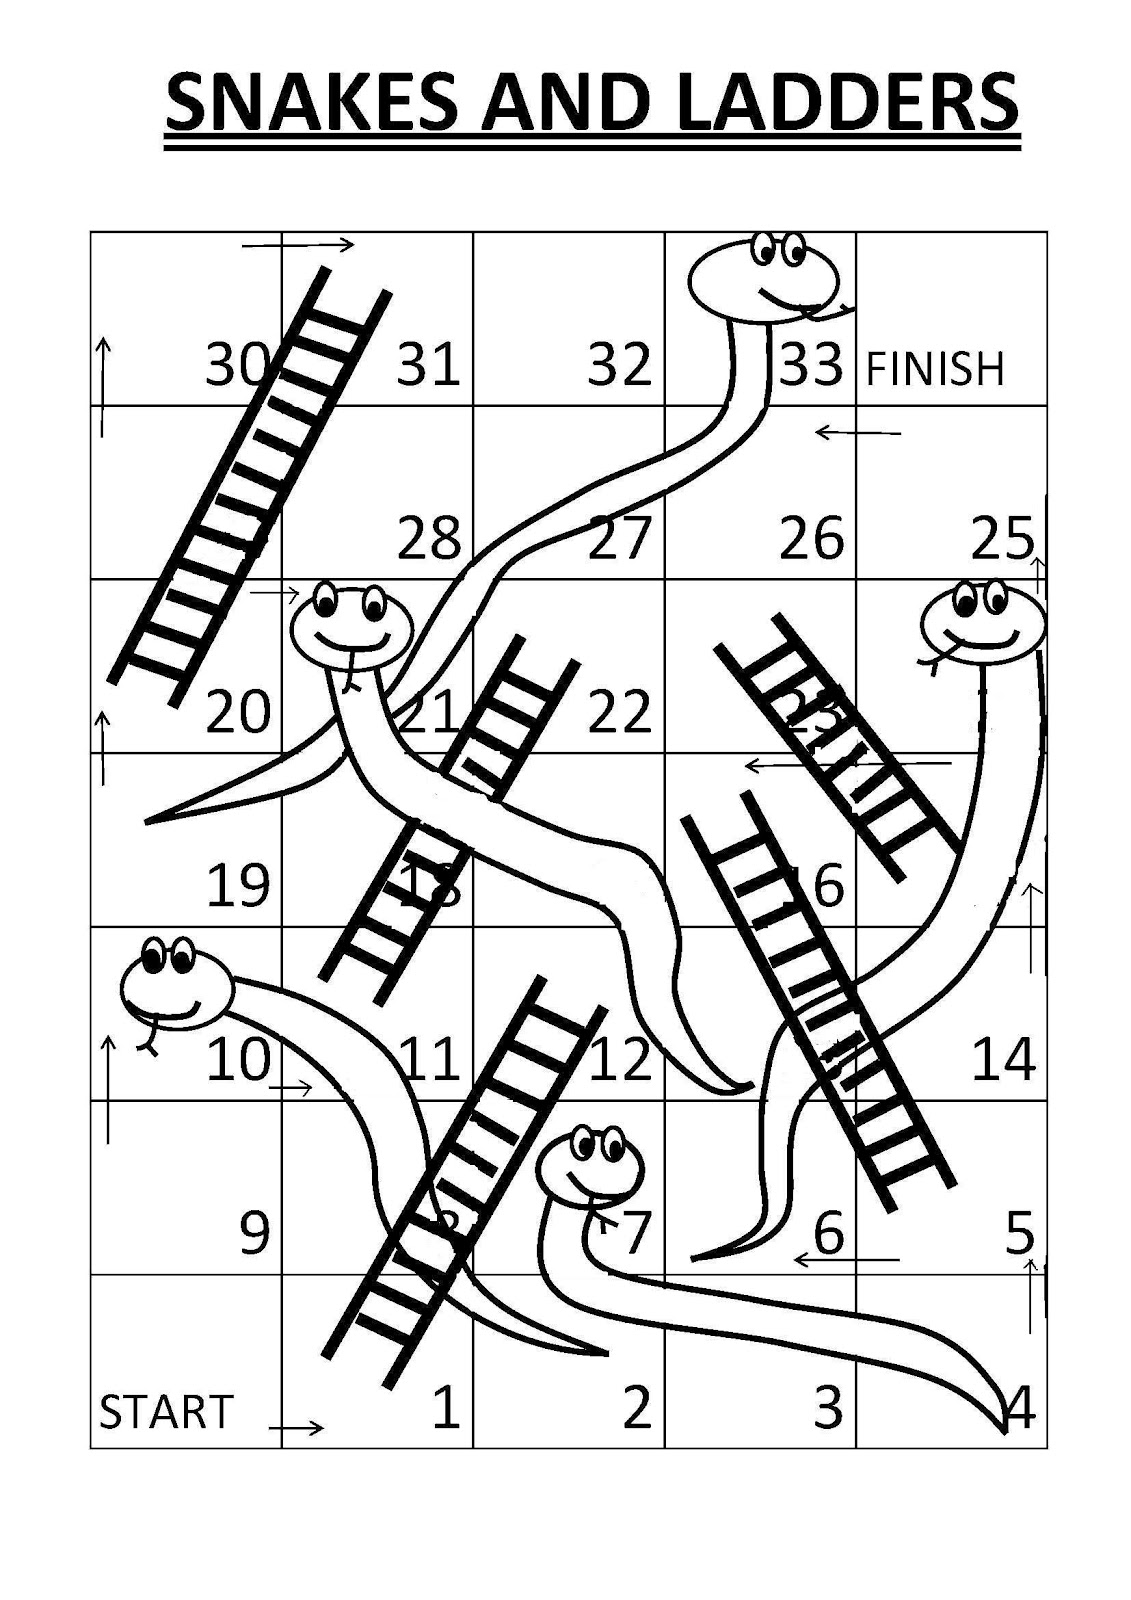 snakes-ladders-board-game-learningenglish-esl